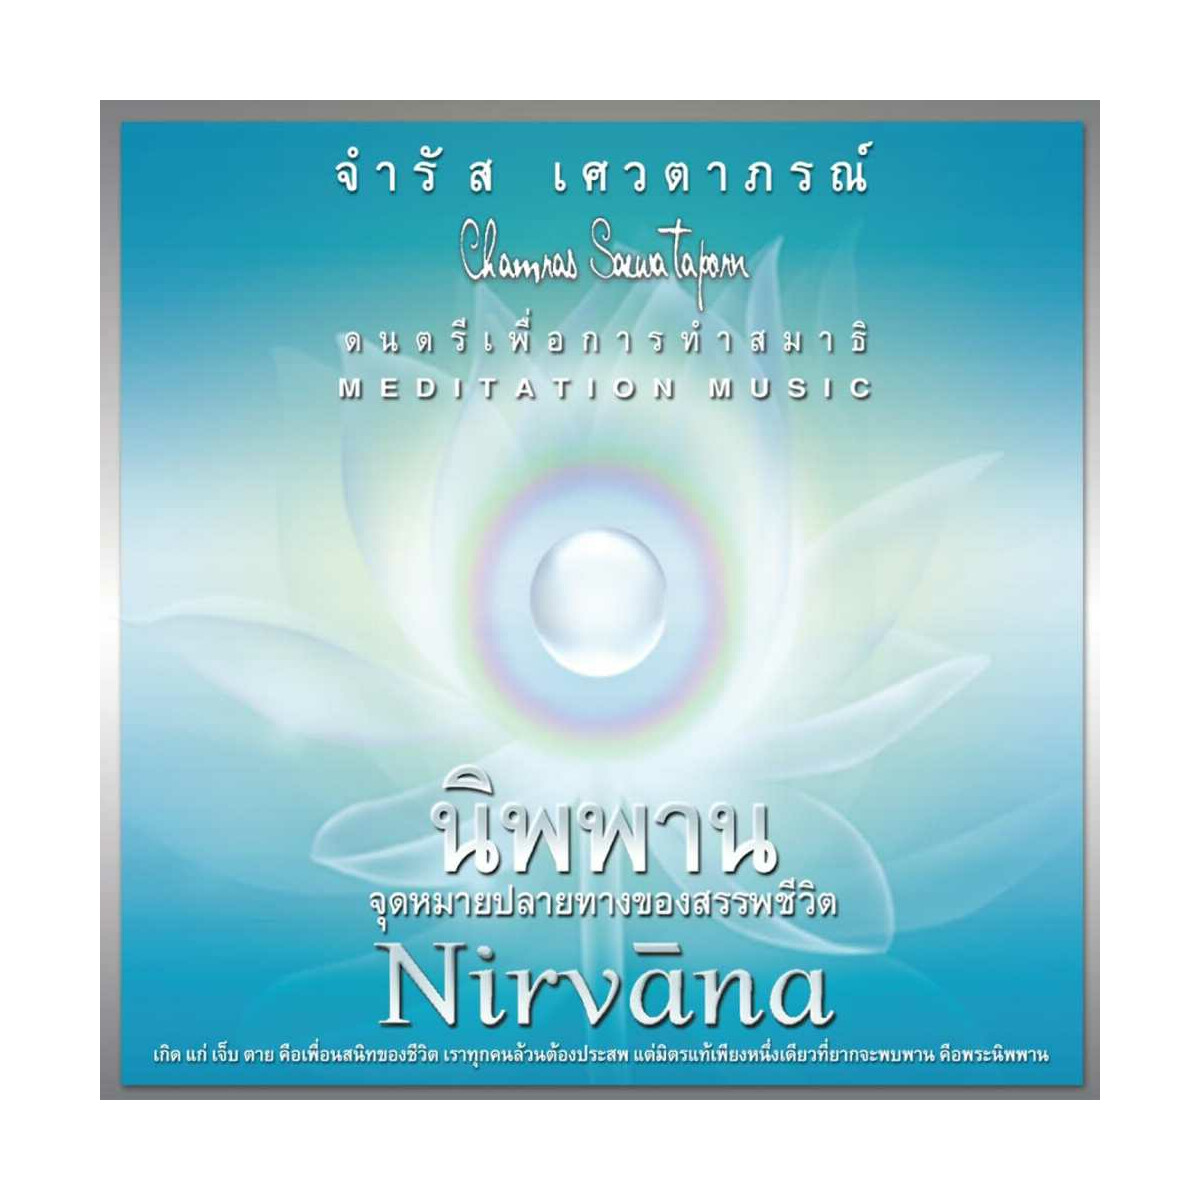 CD Chamras Saewataporn - Meditation Music Nirvana, Green...